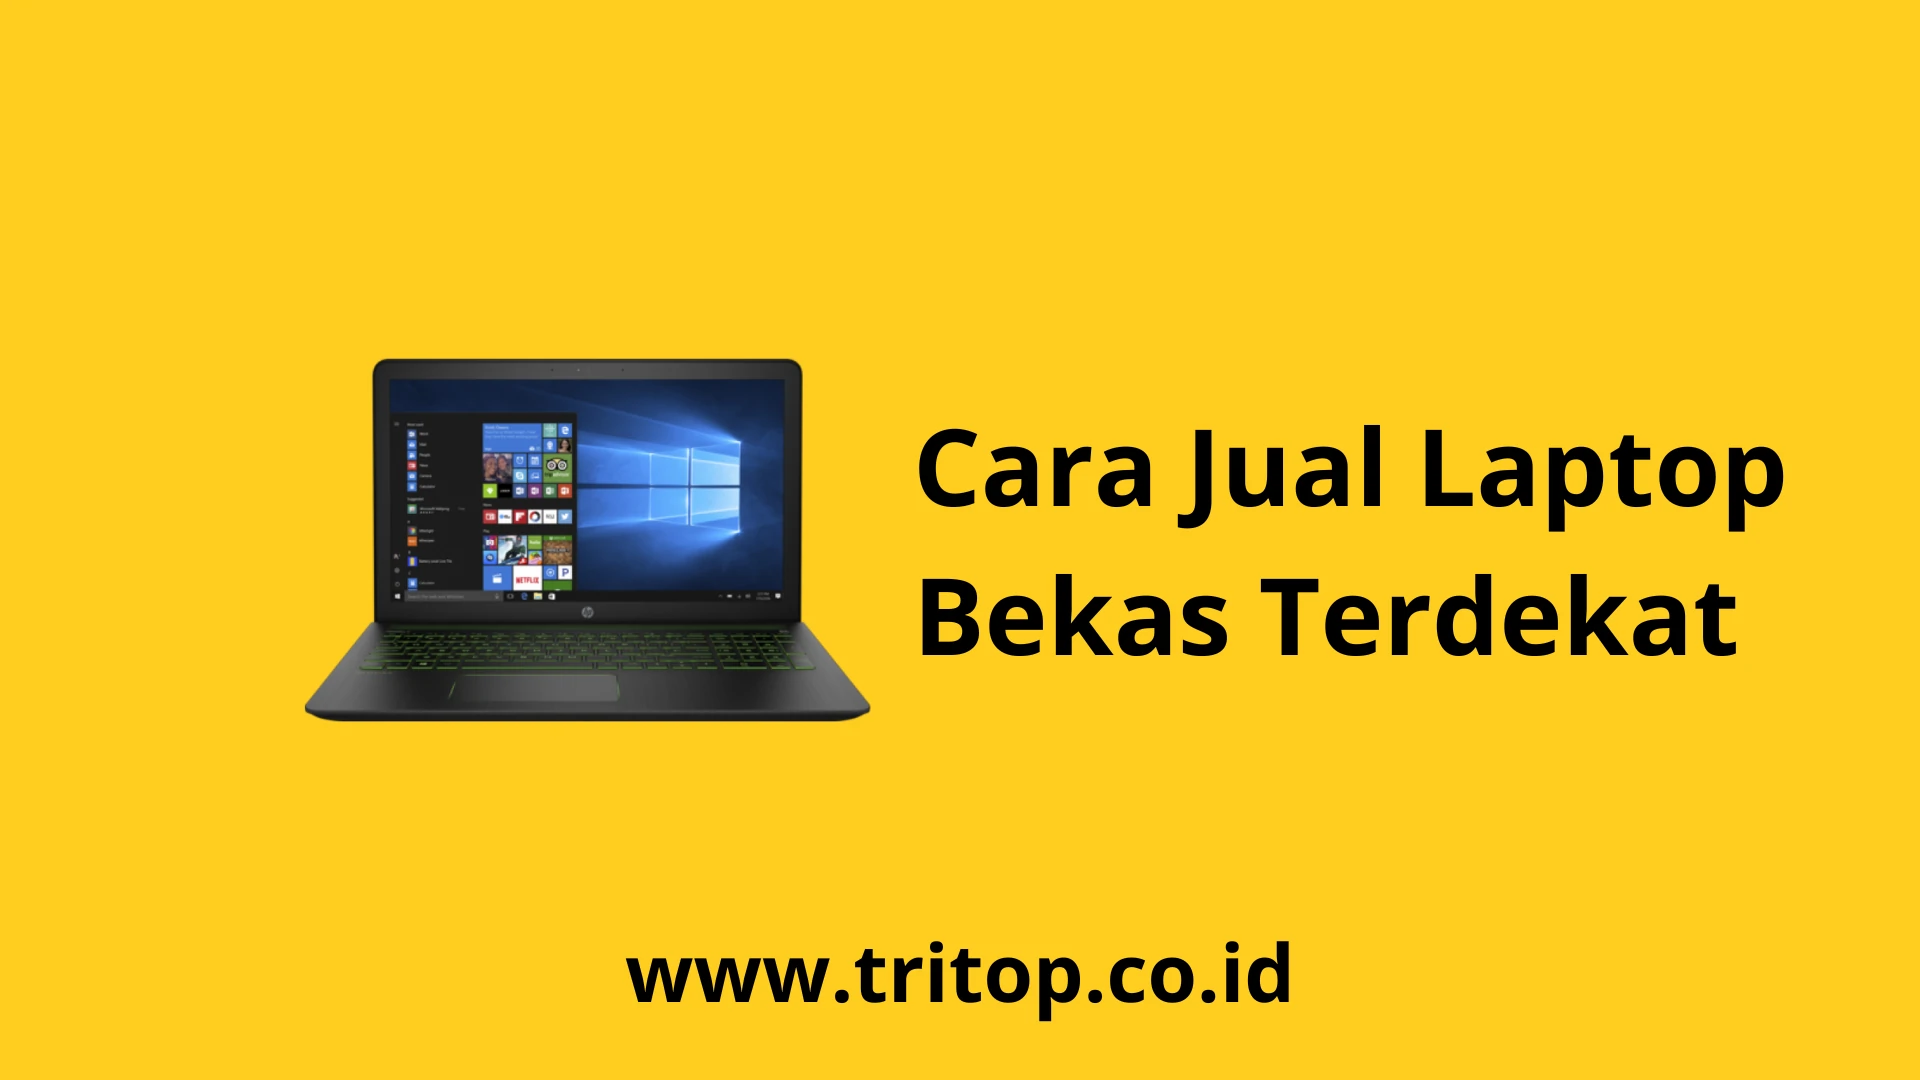 Jual Laptop Bekas Terdekat Tritop.co.id